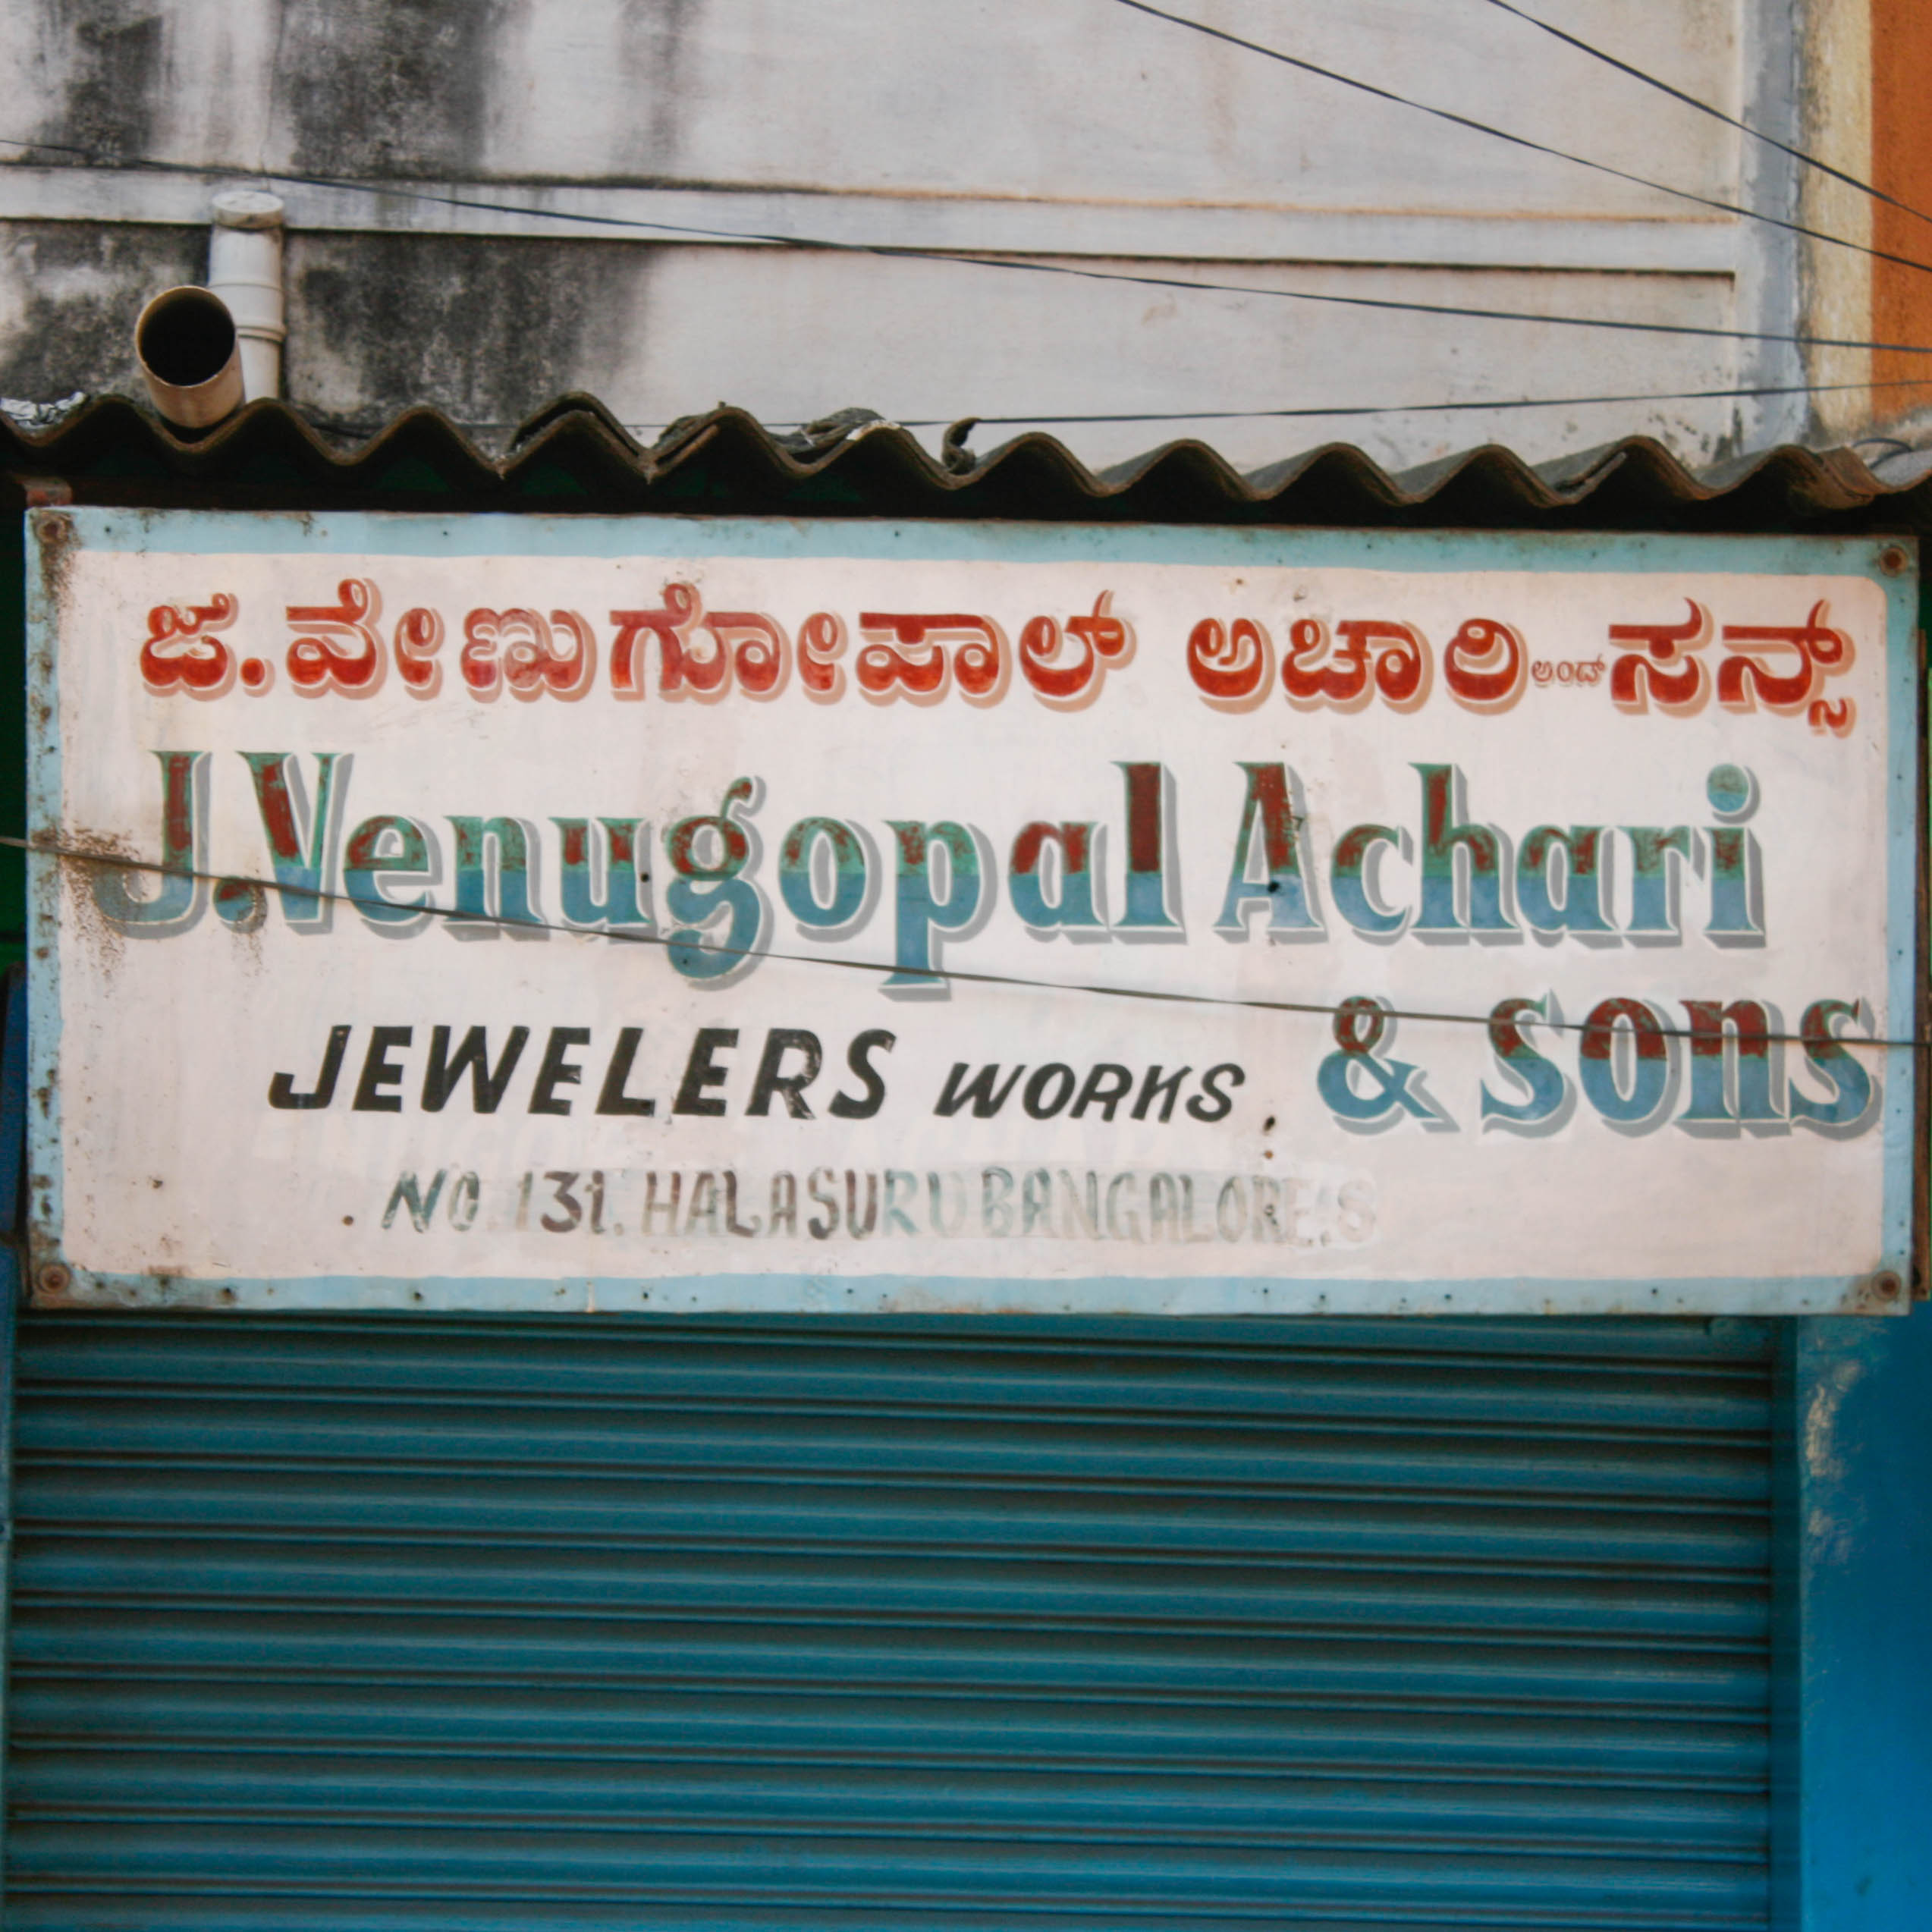 J. Venugopal Achari & Sons Jewelers Works